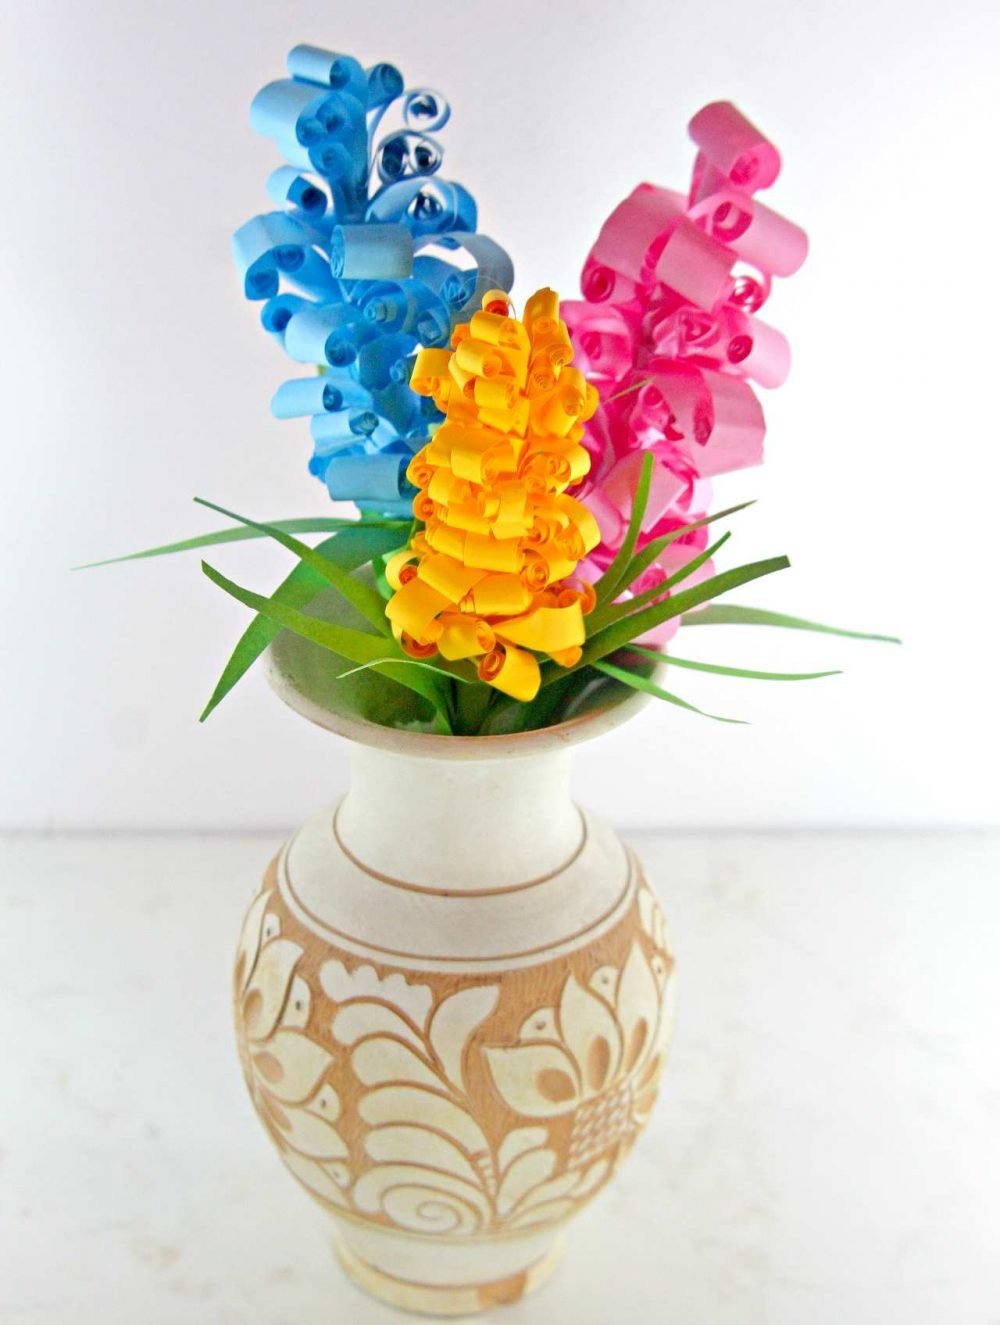 Paper Hyacinth Flower Craft Image